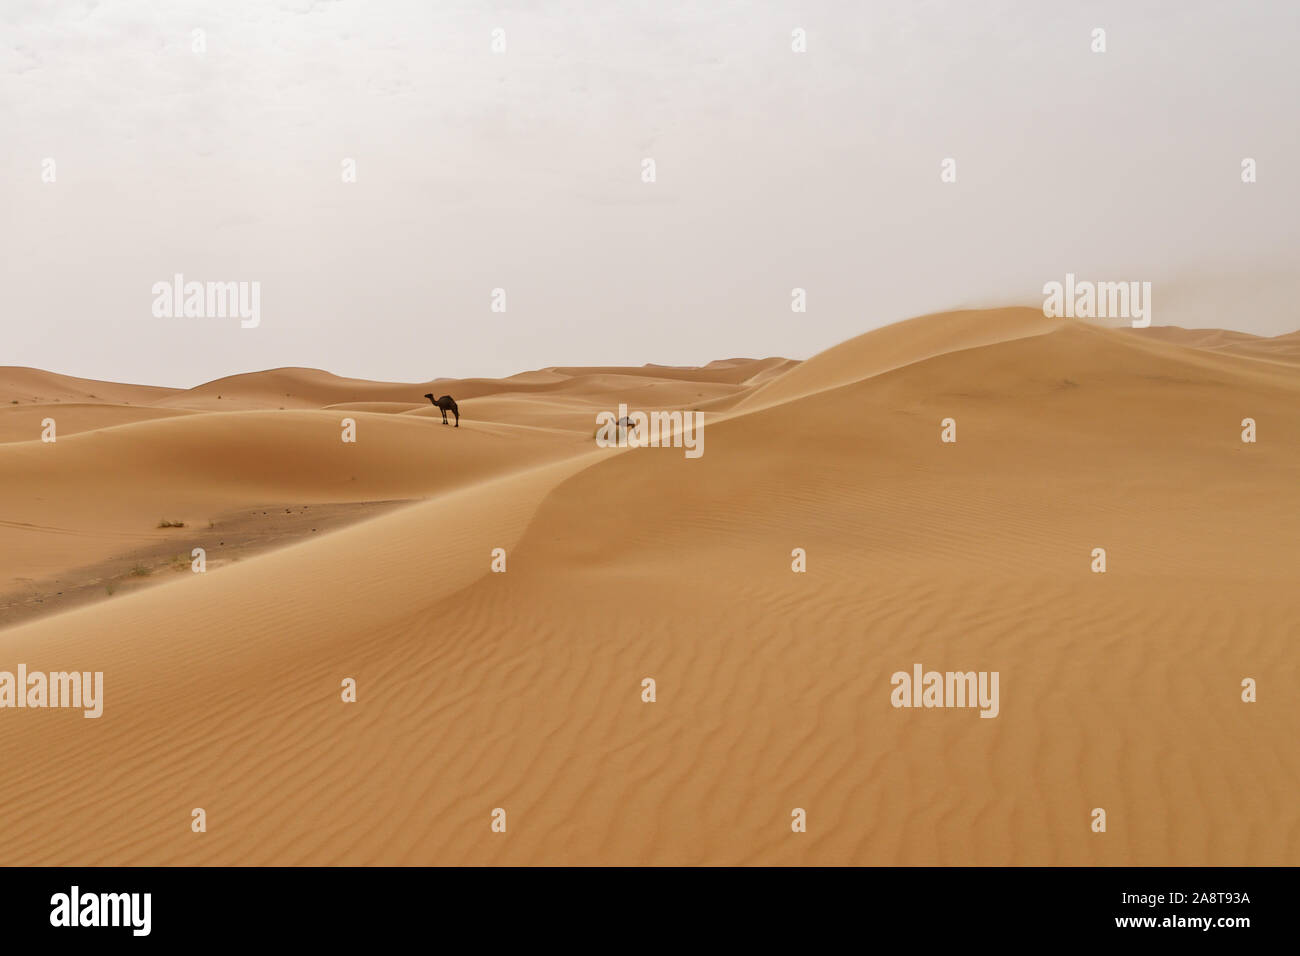 Sand dunes in the moroccan desert Stock Photo